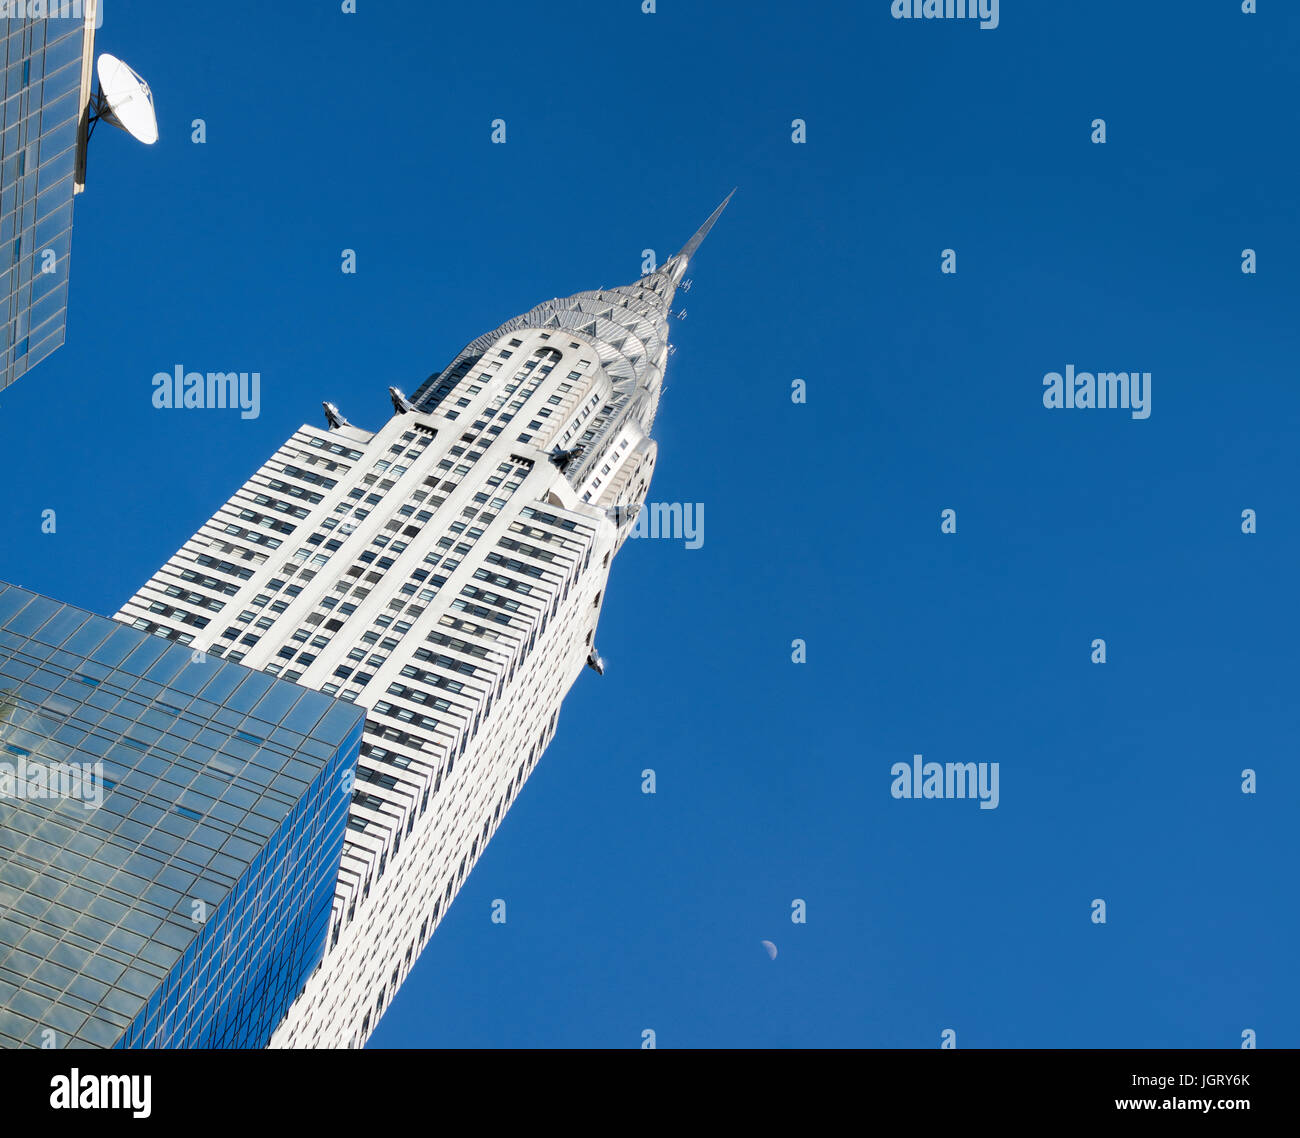 skyline looking up buildings midtown Manhattan famous Chrysler building Stock Photo